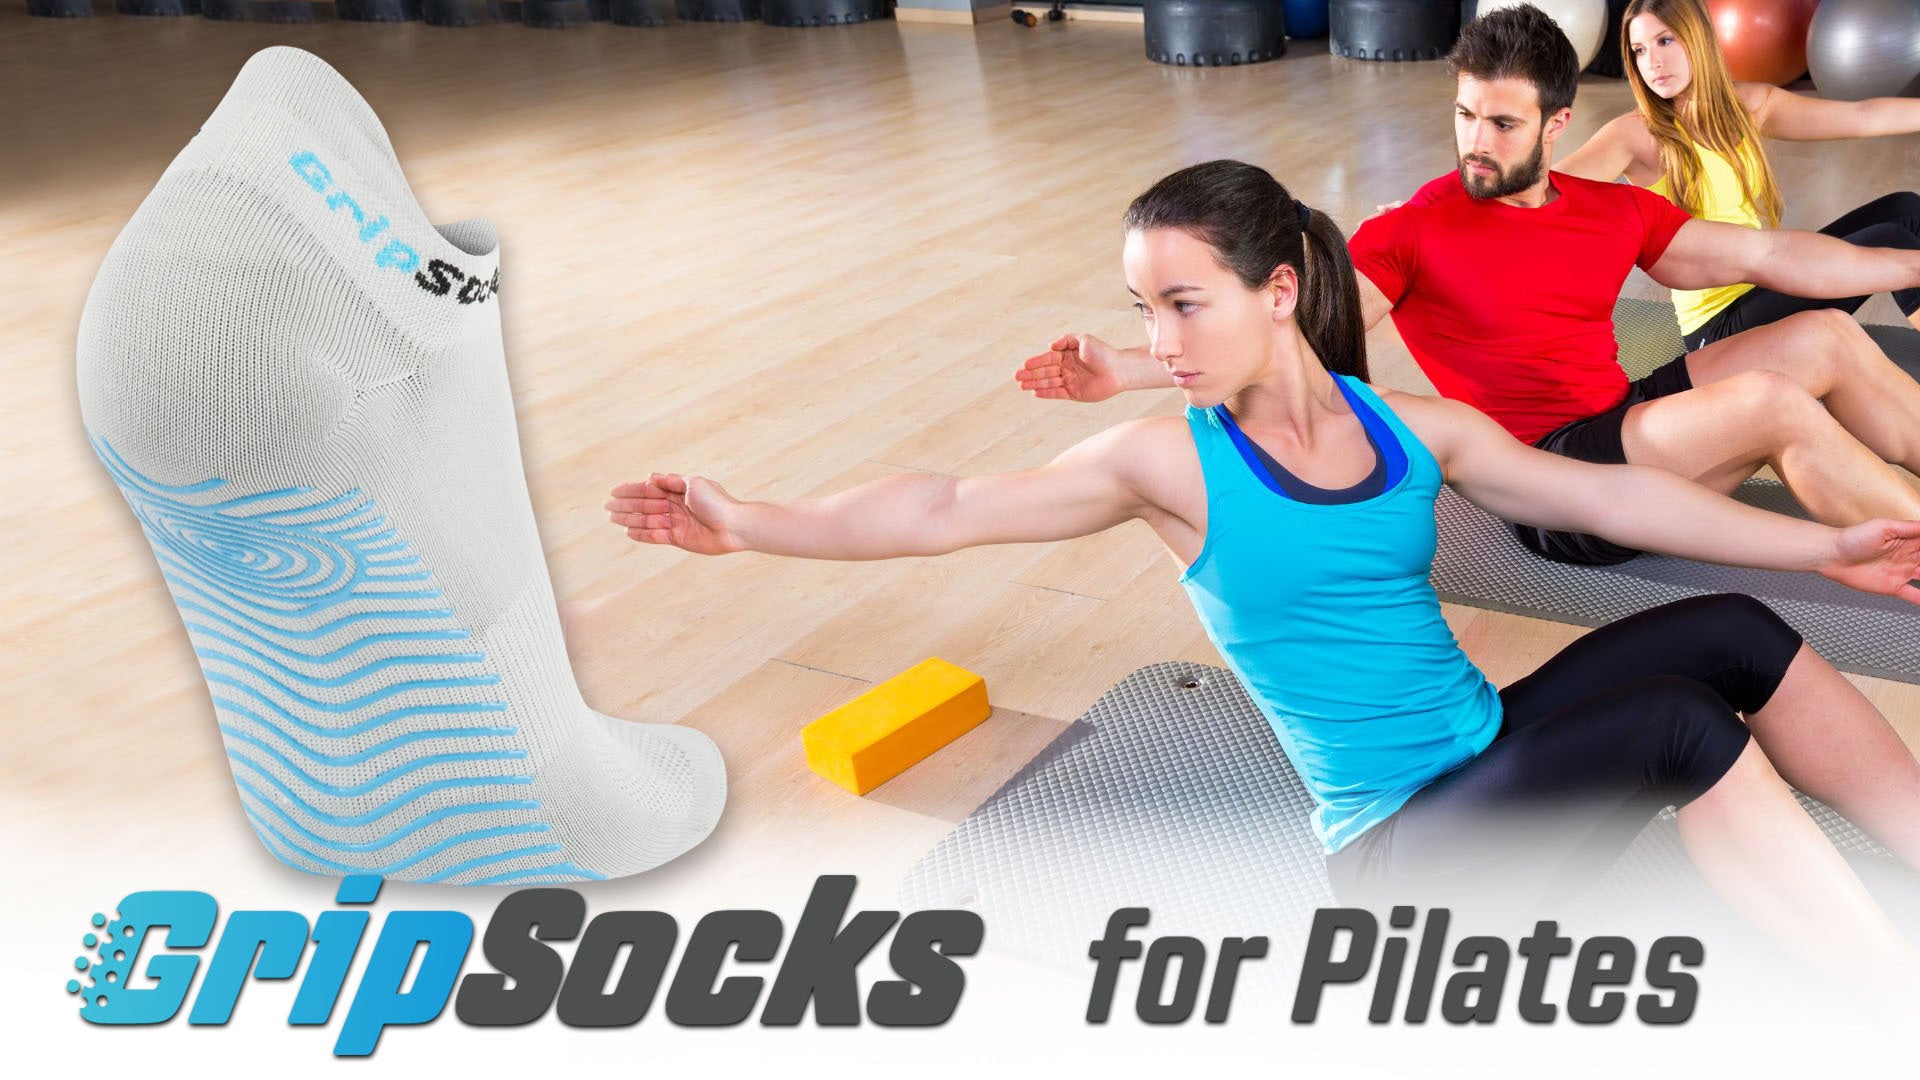 Pilates Grip Socks